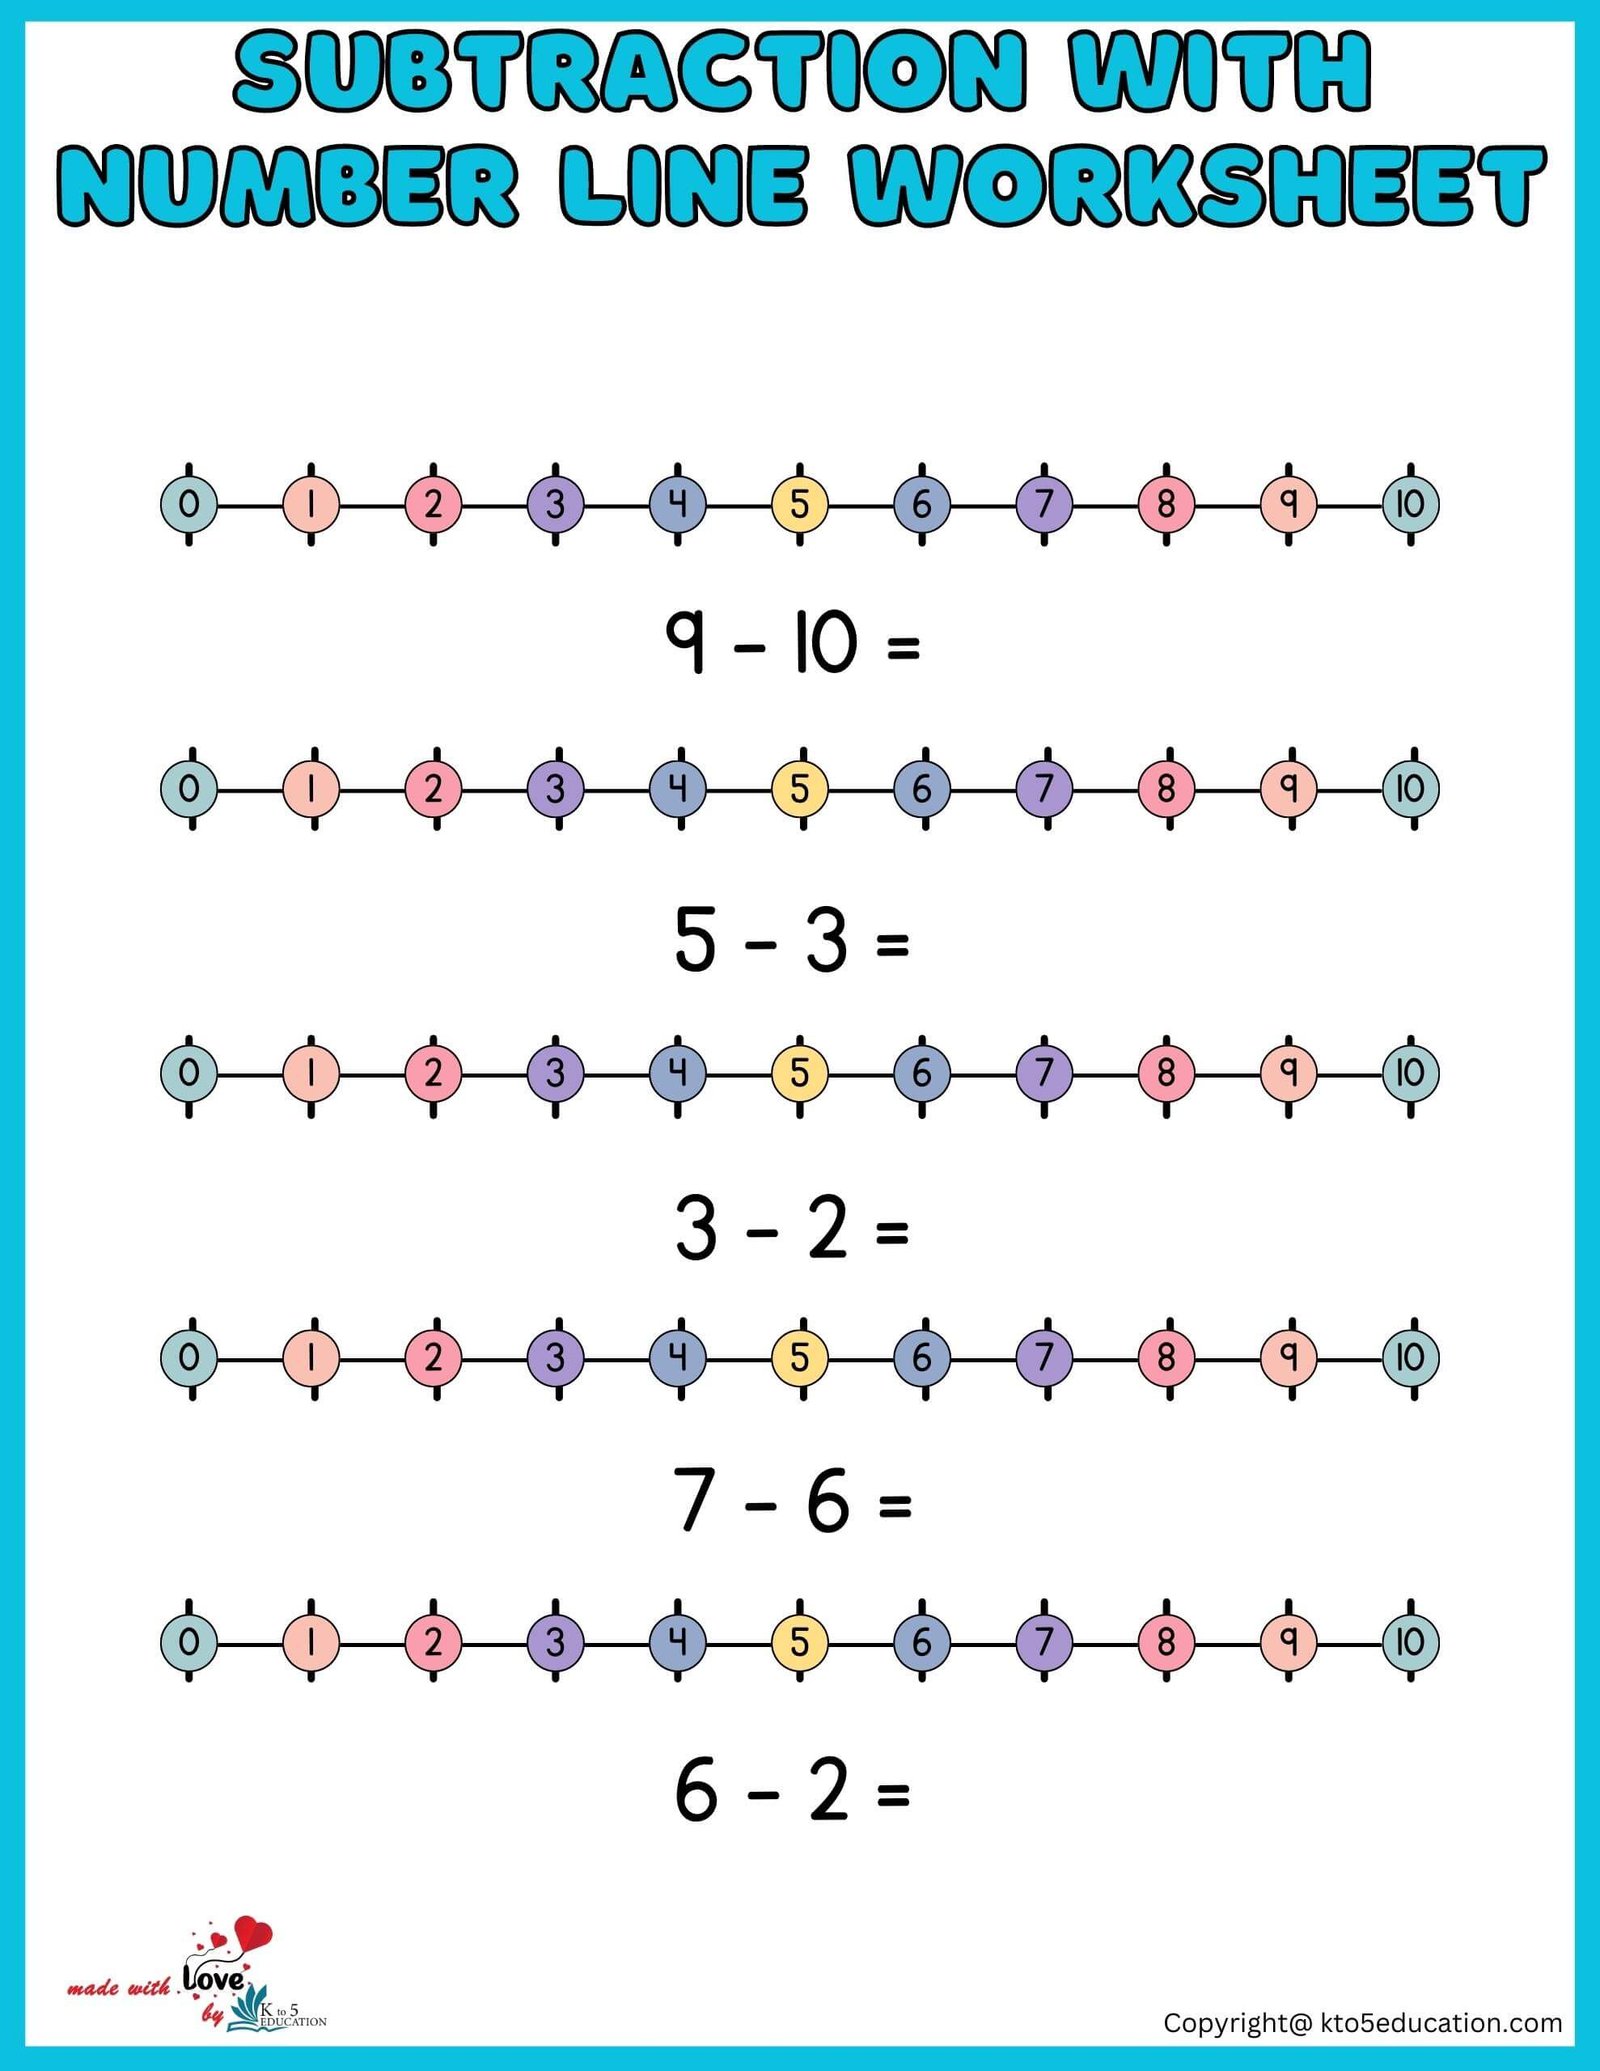 subtraction-with-number-line-worksheet-1-10-2nd-grade